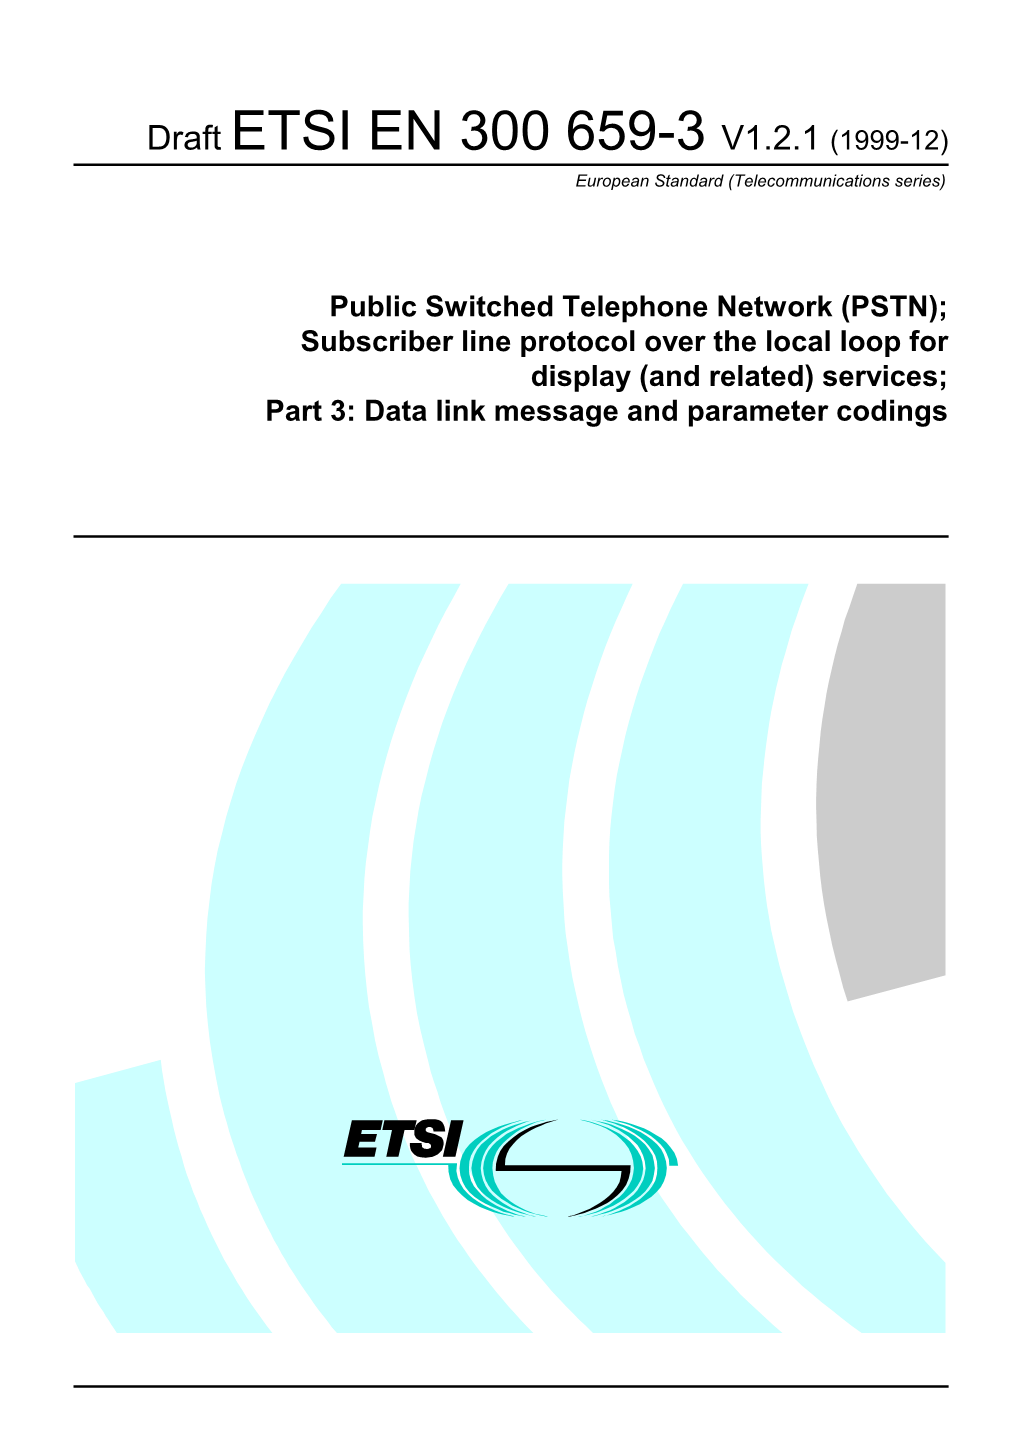 EN 300 659-3 V1.2.1 (1999-12) European Standard (Telecommunications Series)